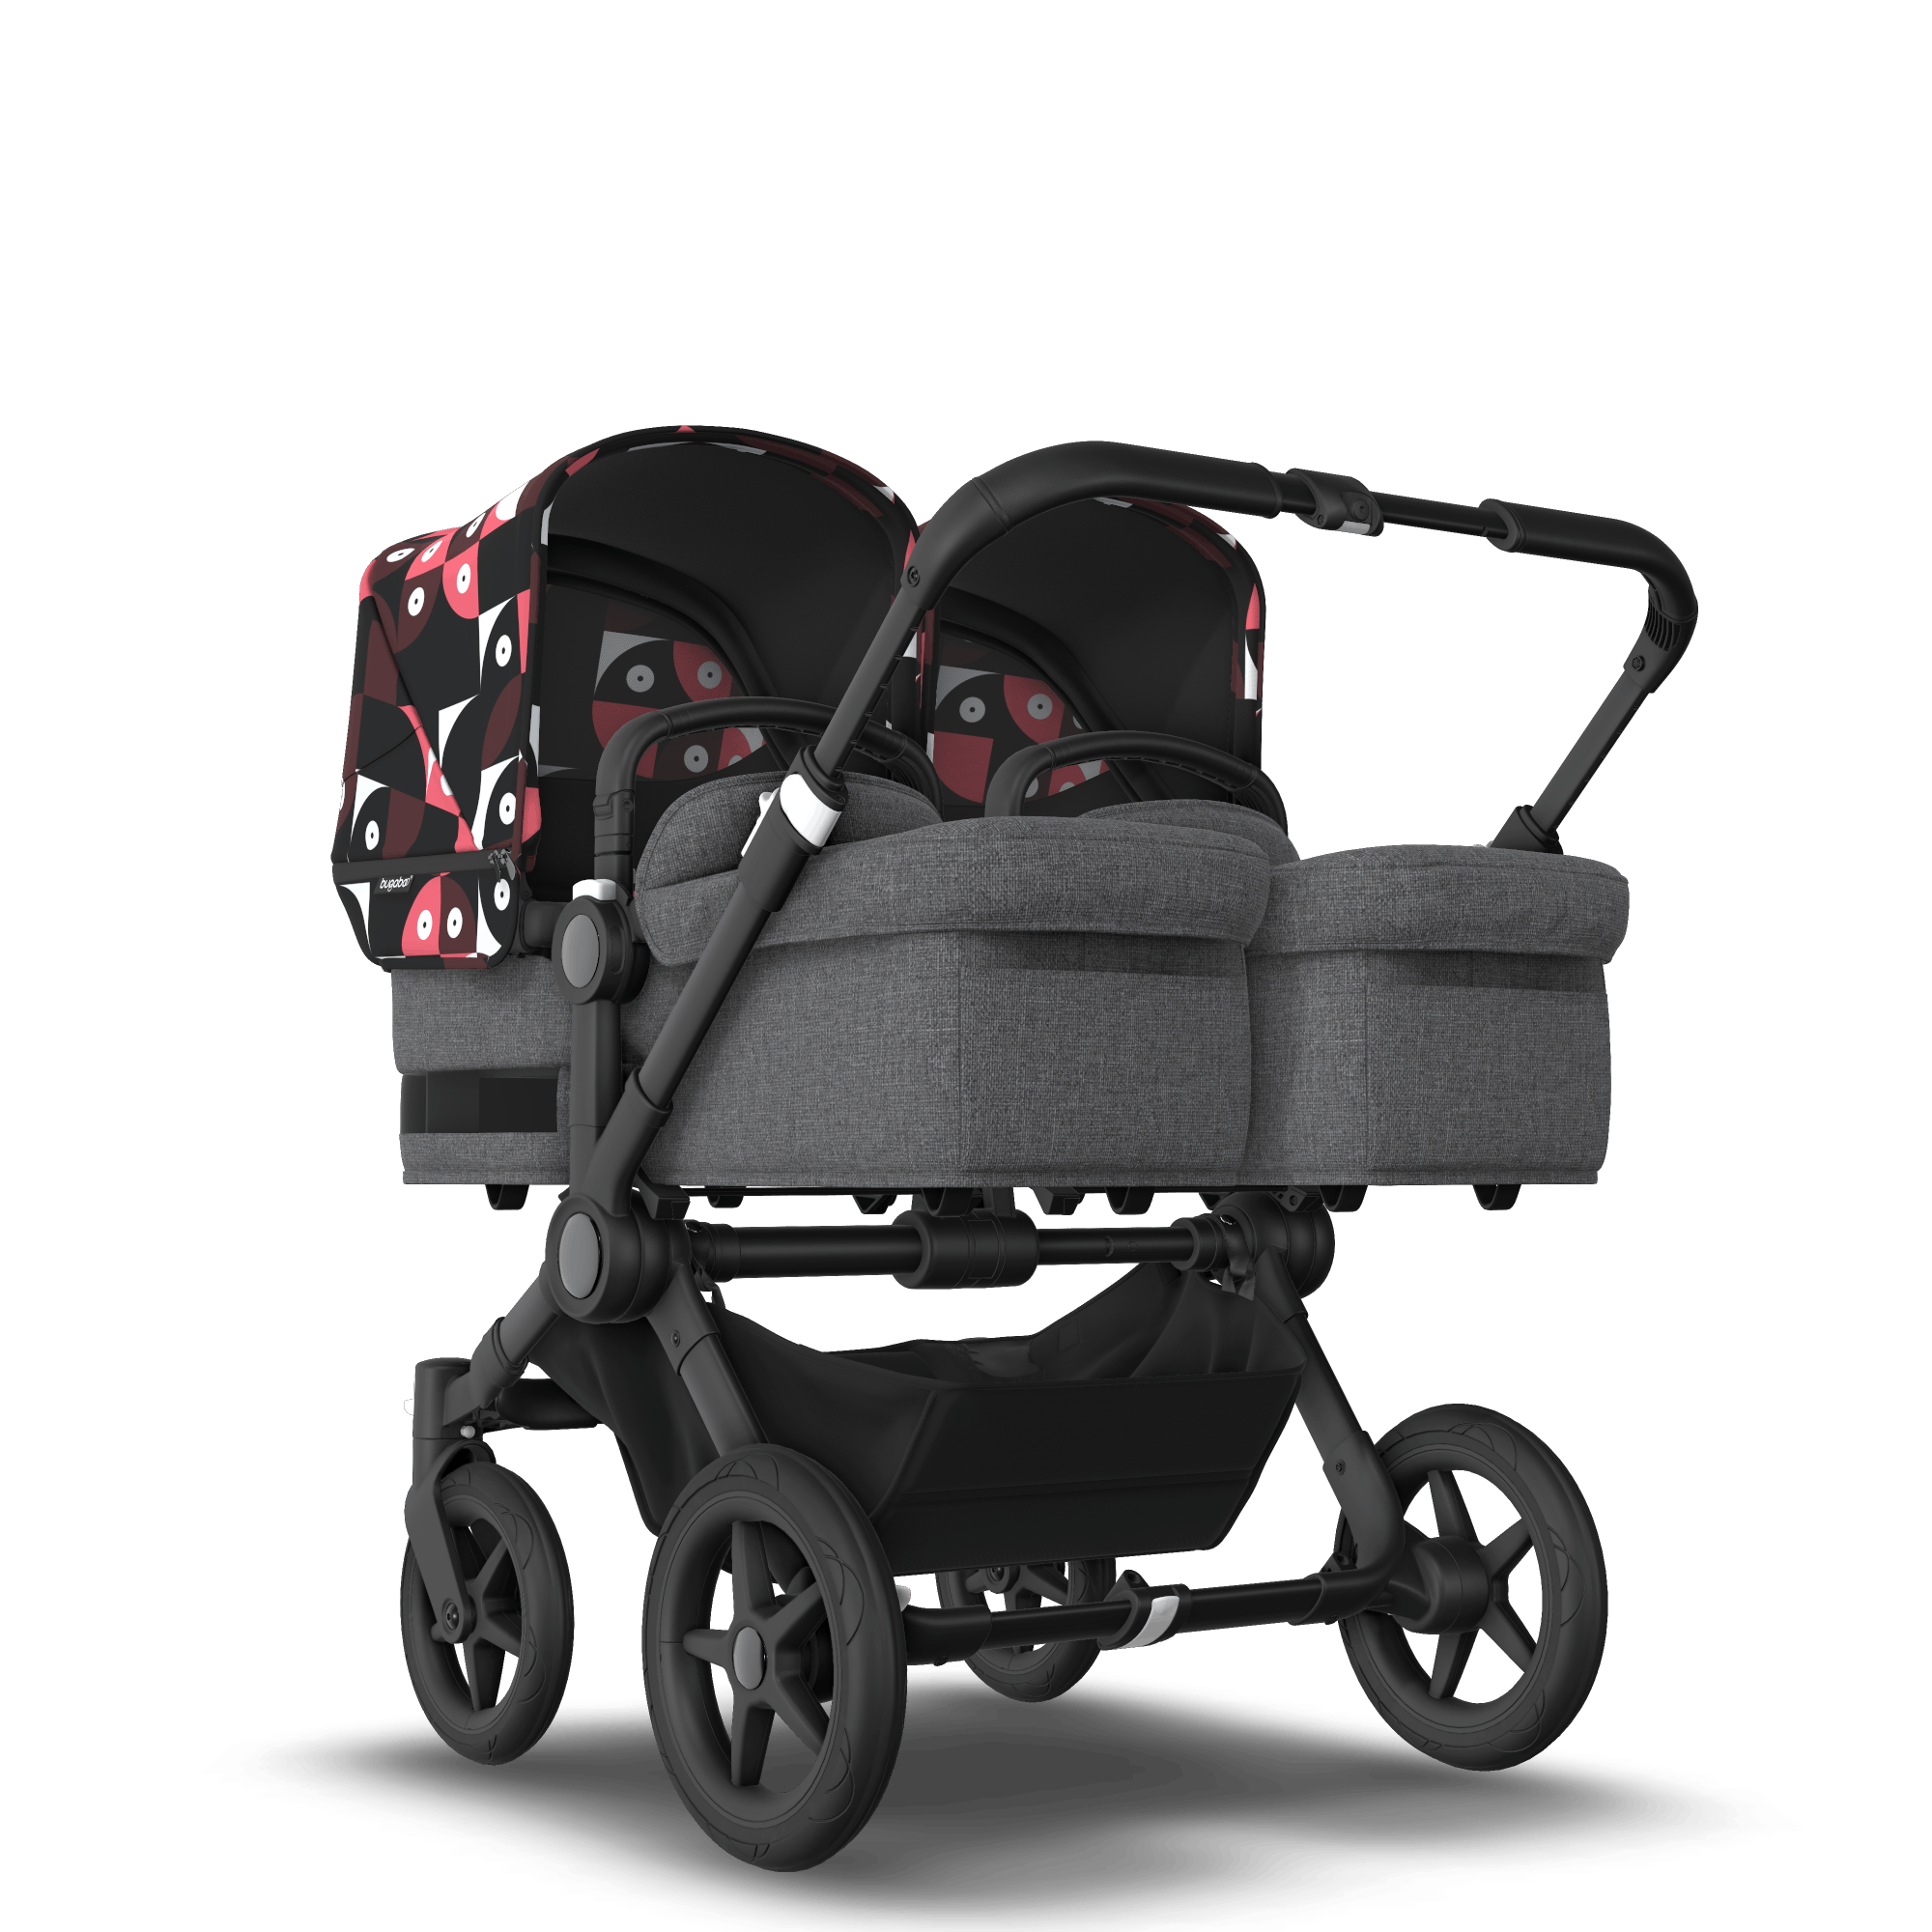 Bugaboo Donkey 5 Twin bassinet and seat stroller black base grey mélange fabrics animal explorer pink/red sun canopy